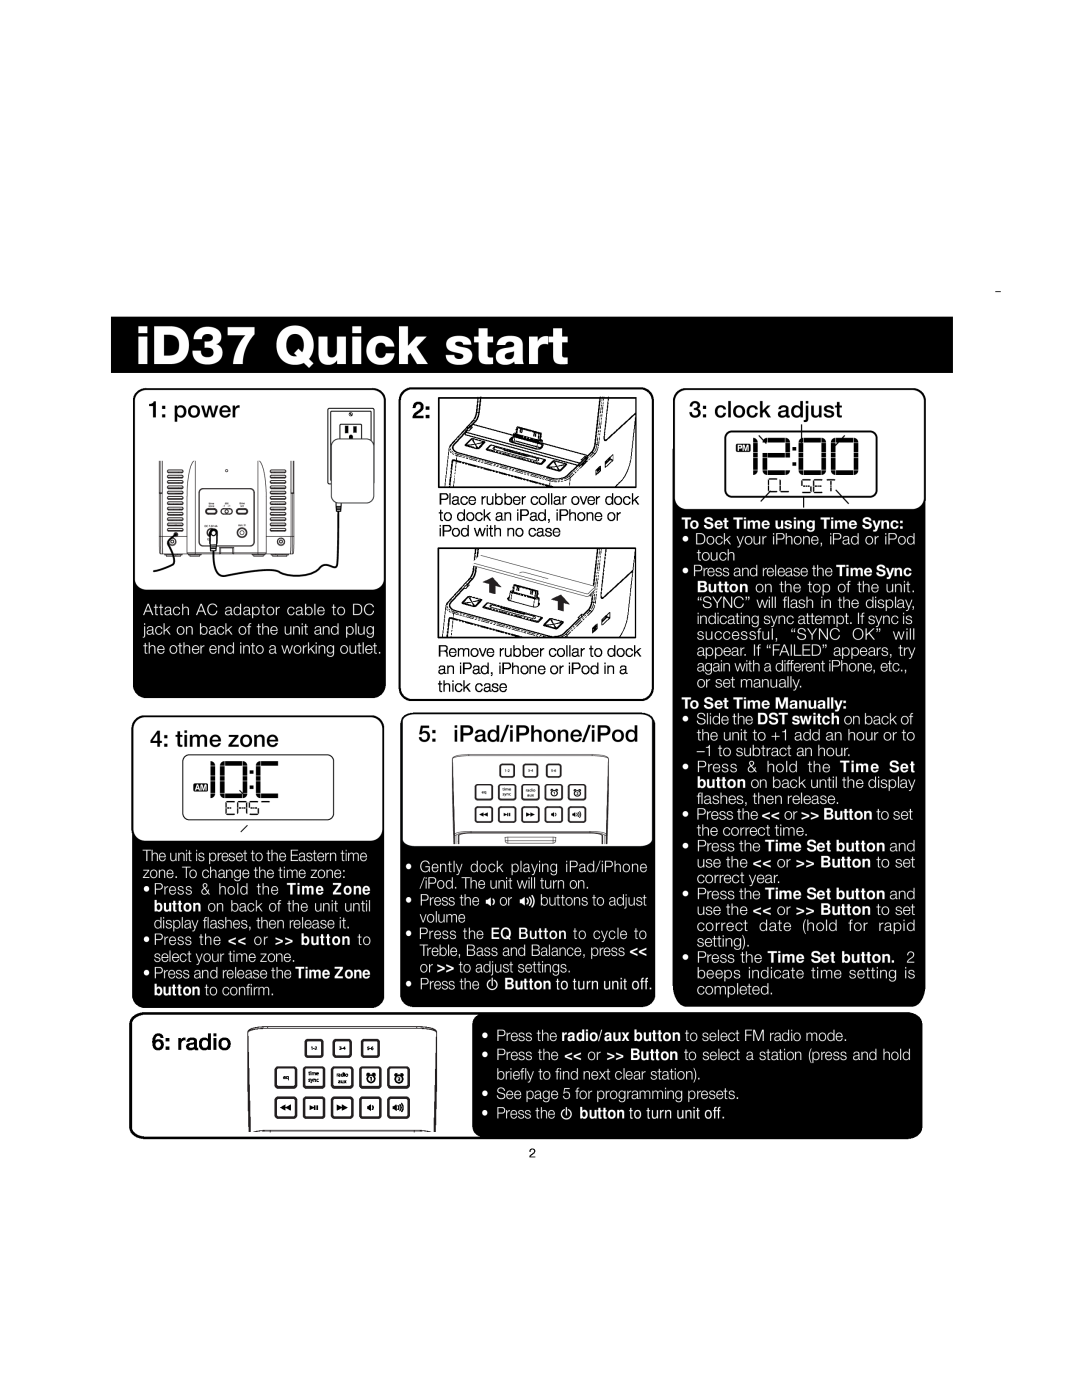 iHome ID37 manual iD37 Quick start, power, time zone, iPad/iPhone/iPod, clock adjust, radio, To Set Time using Time Sync 